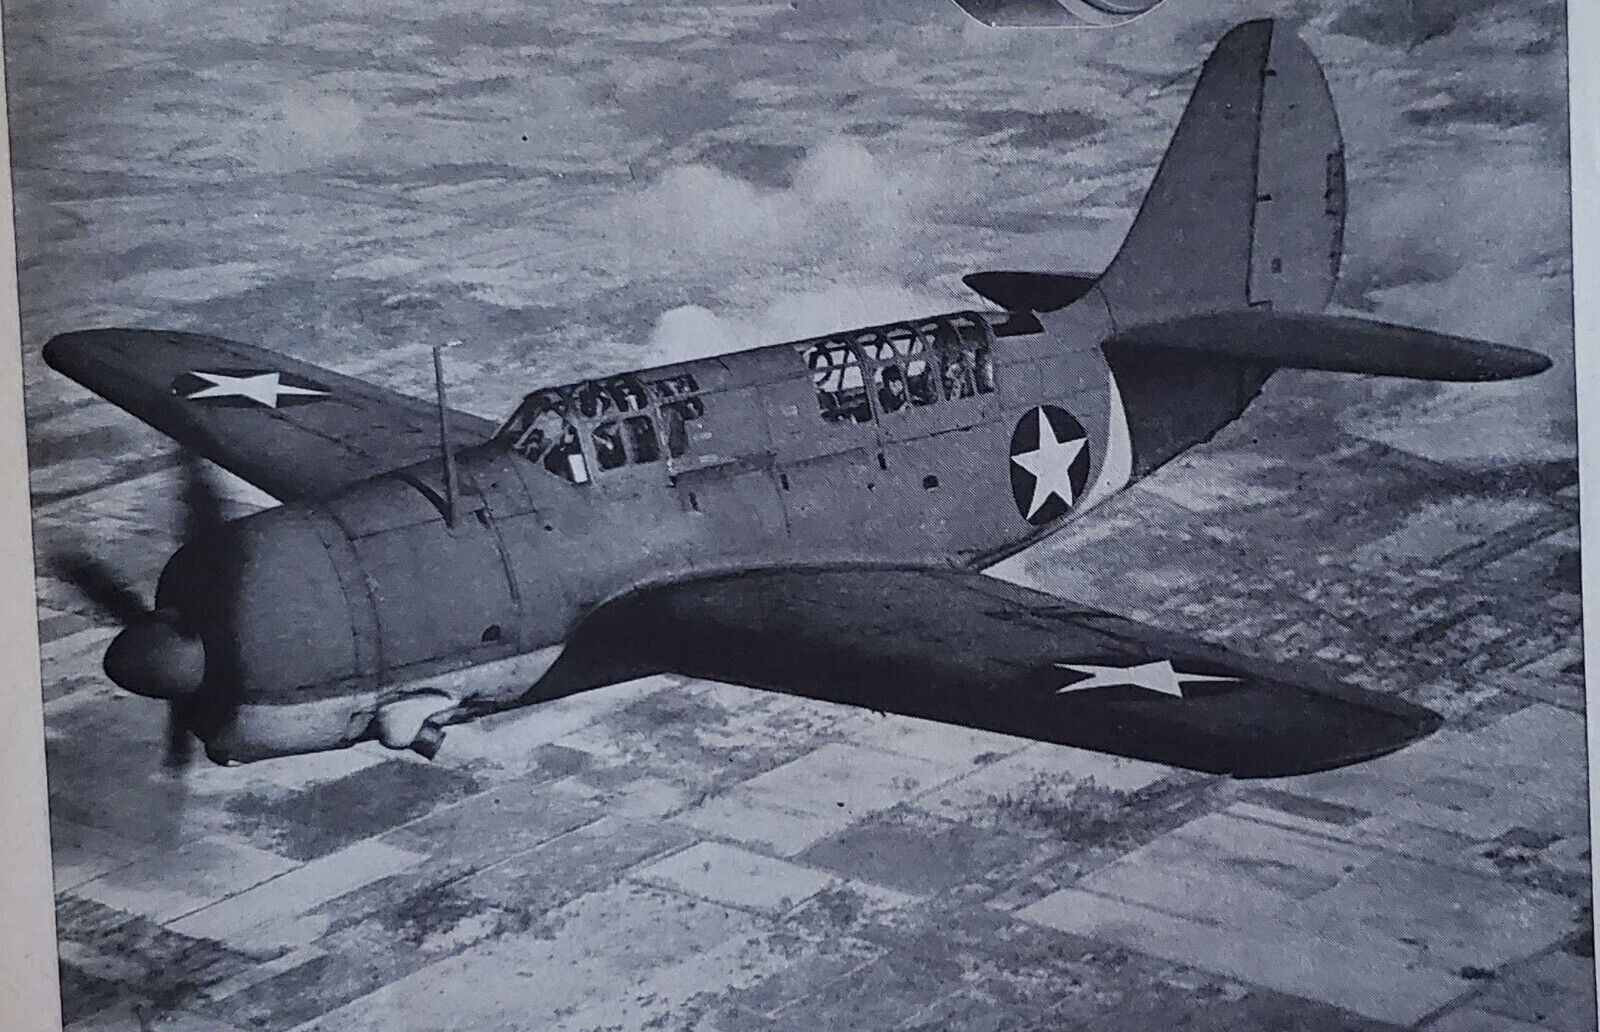 1944 CURTISS HELLDIVER Dive Bomber Aircraft Advertisement 1B13